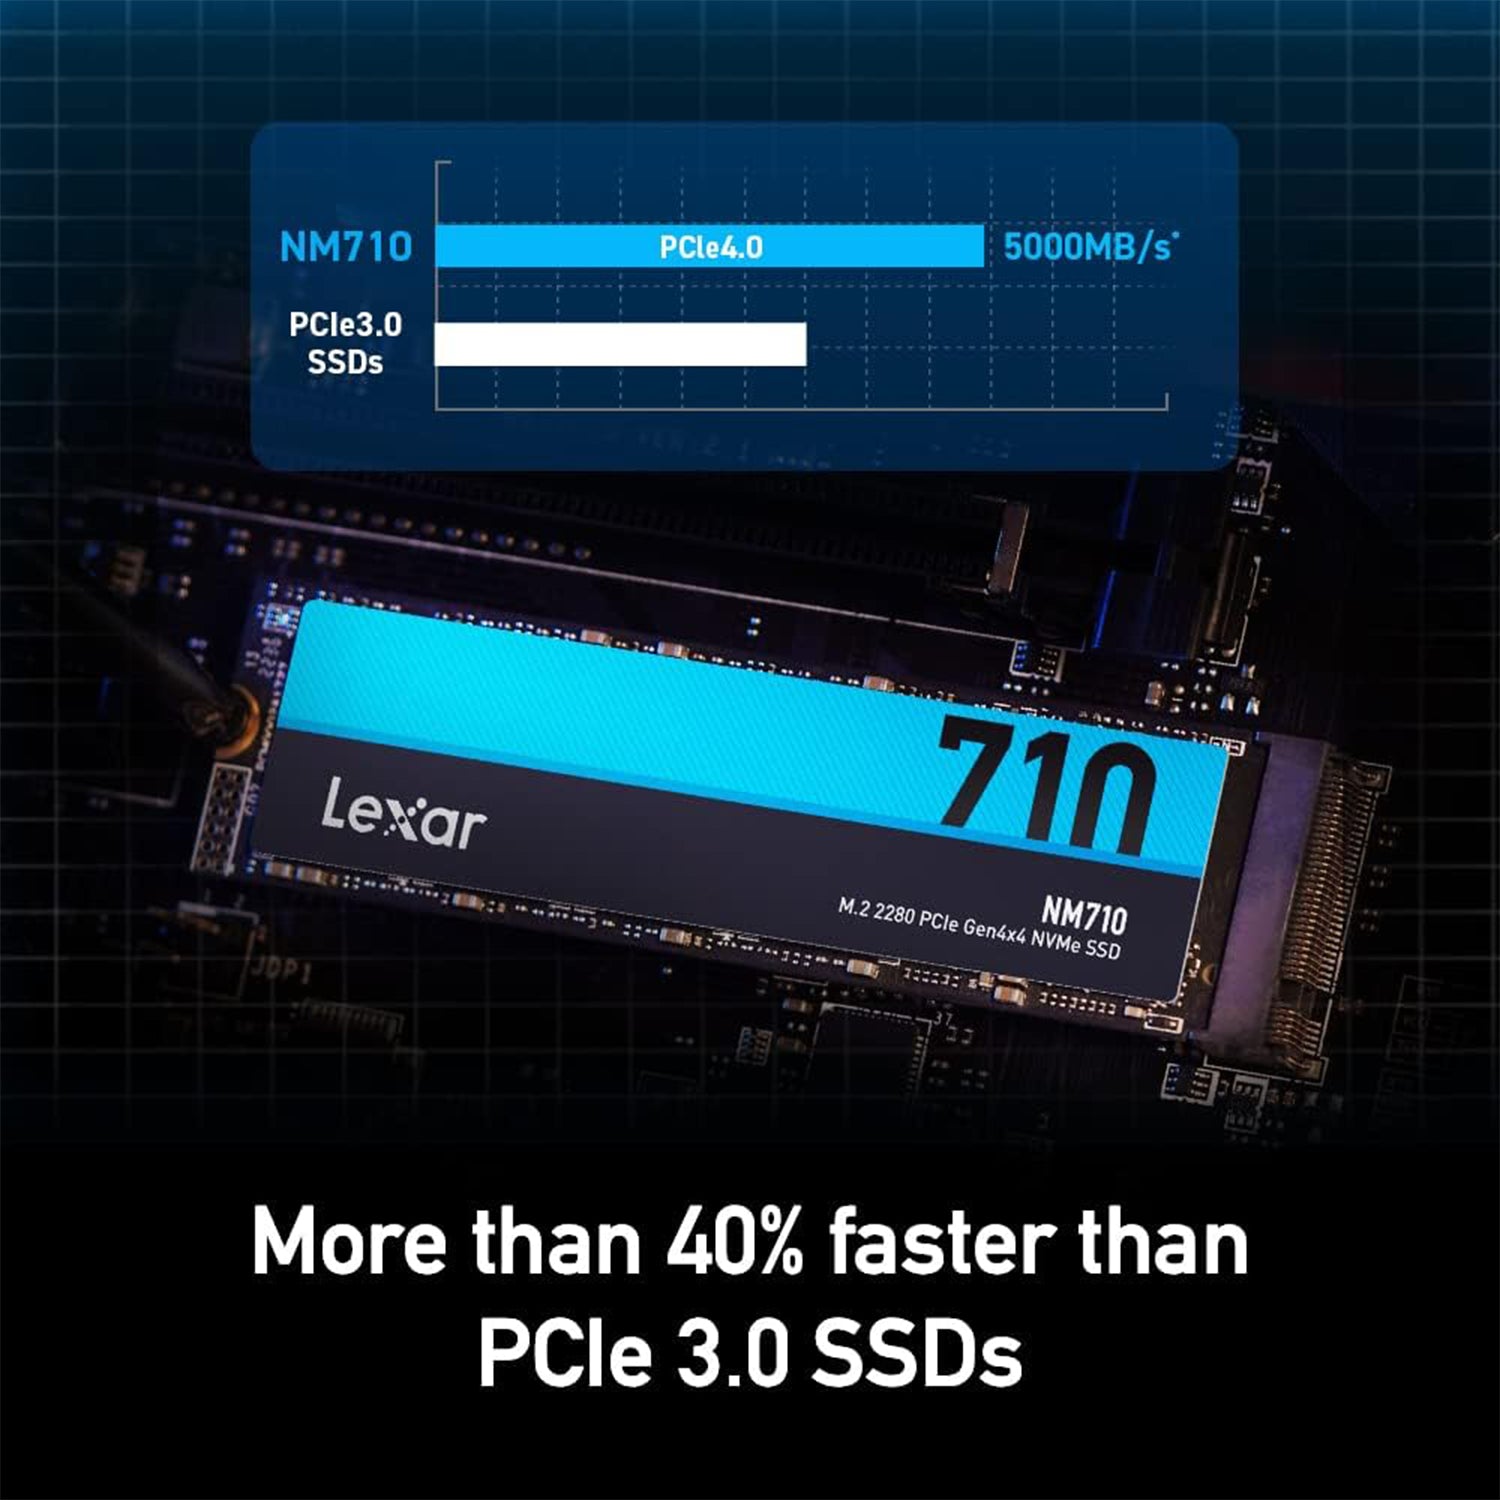 Lexar NM710 1TB NVMe SSD, M.2 2280 Form Factor, PCIe Gen4x4 Interface, Read 5000MB/s, Write 4500MB/s for laptops and Desktops (LNM710X001T-RNNNU)